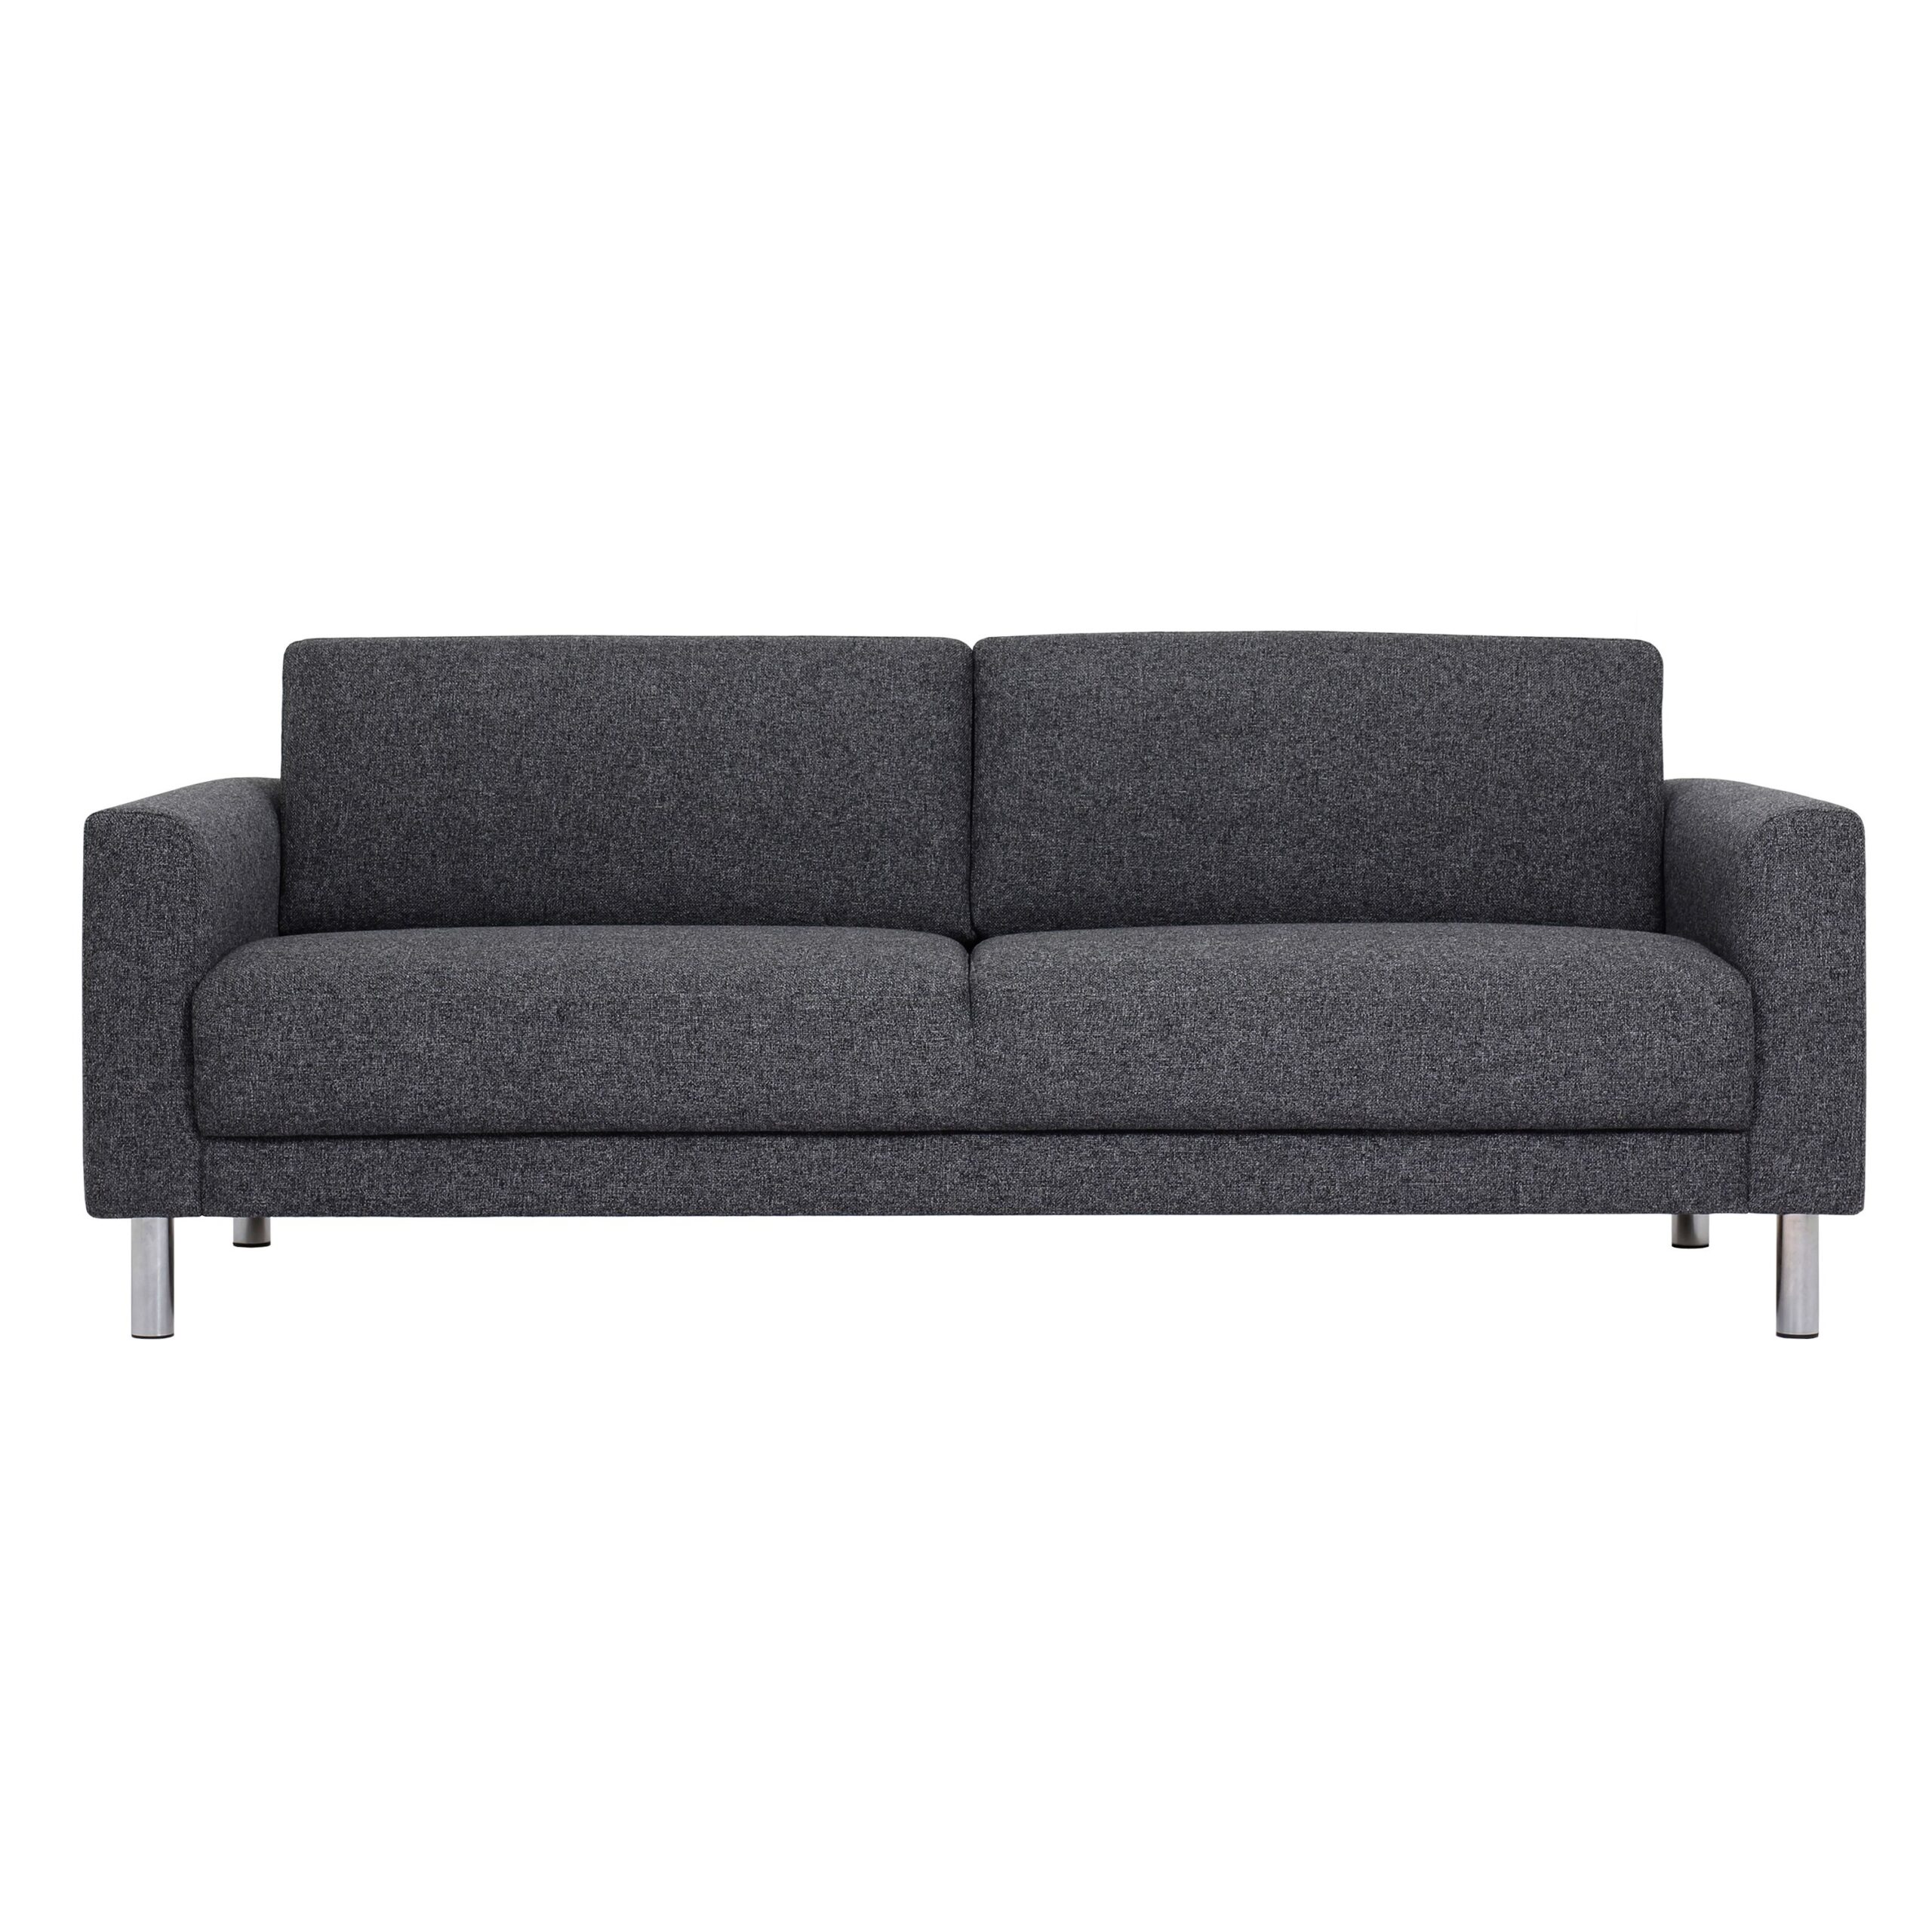 Mex Black 3 Seater Sofa